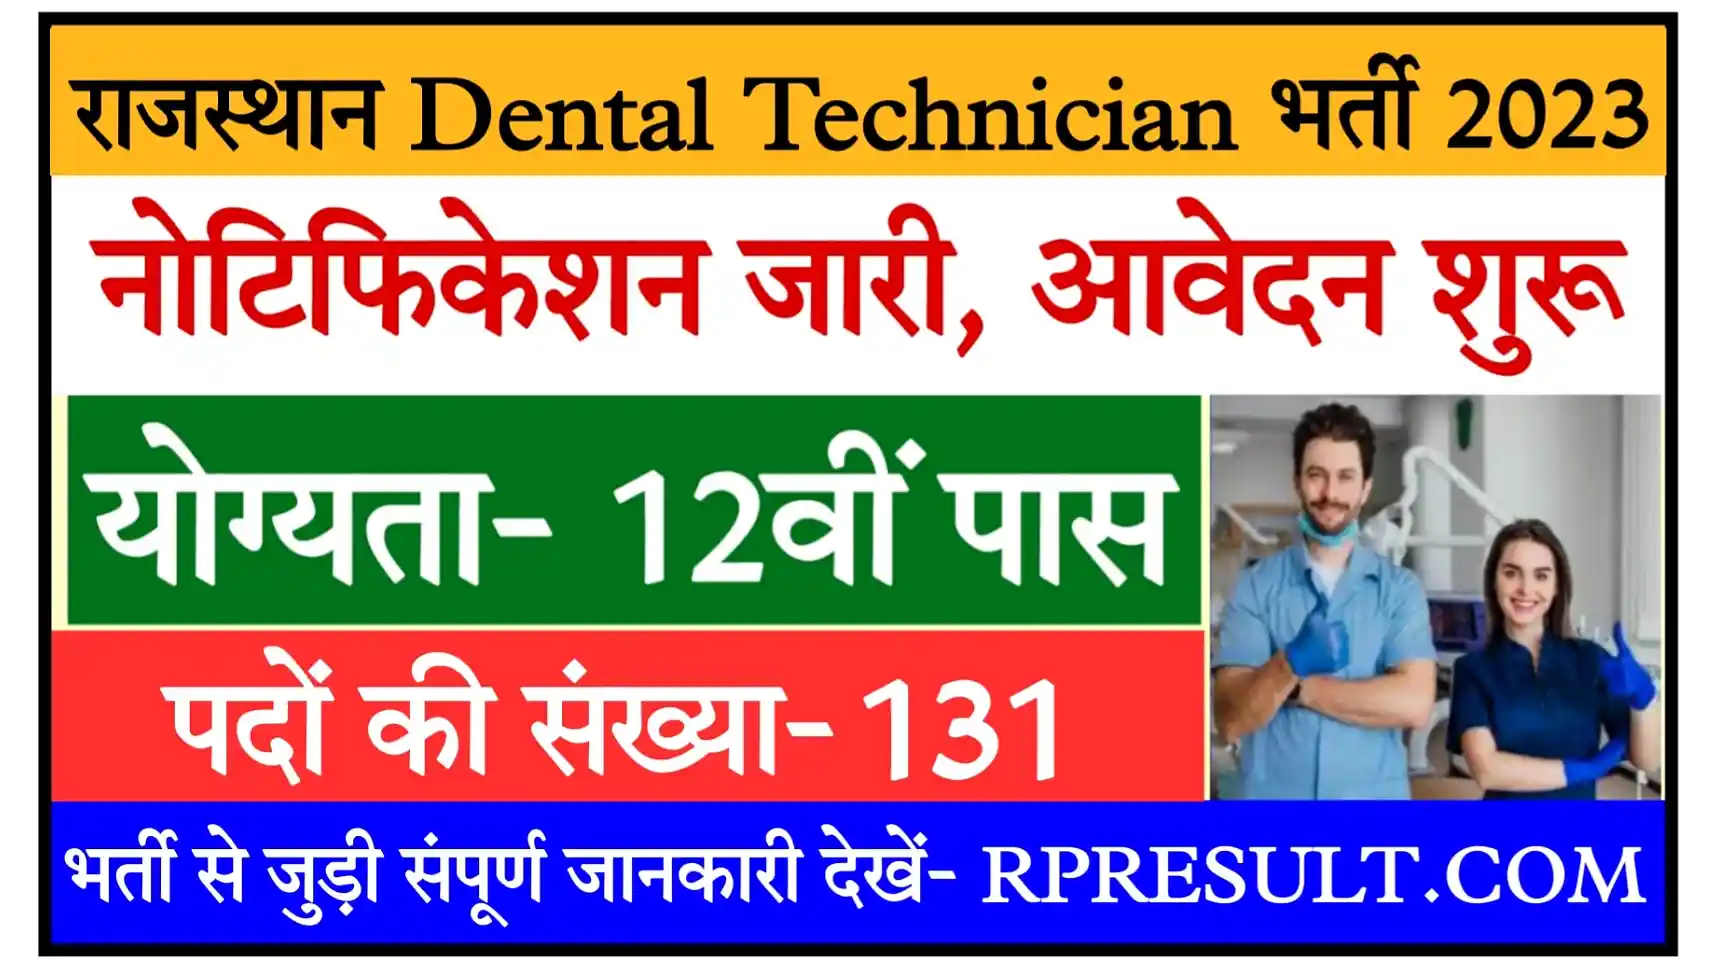 Rajasthan Dental Technician Recruitment 2023 Notification, Apply Online @rajswasthya.nic.in